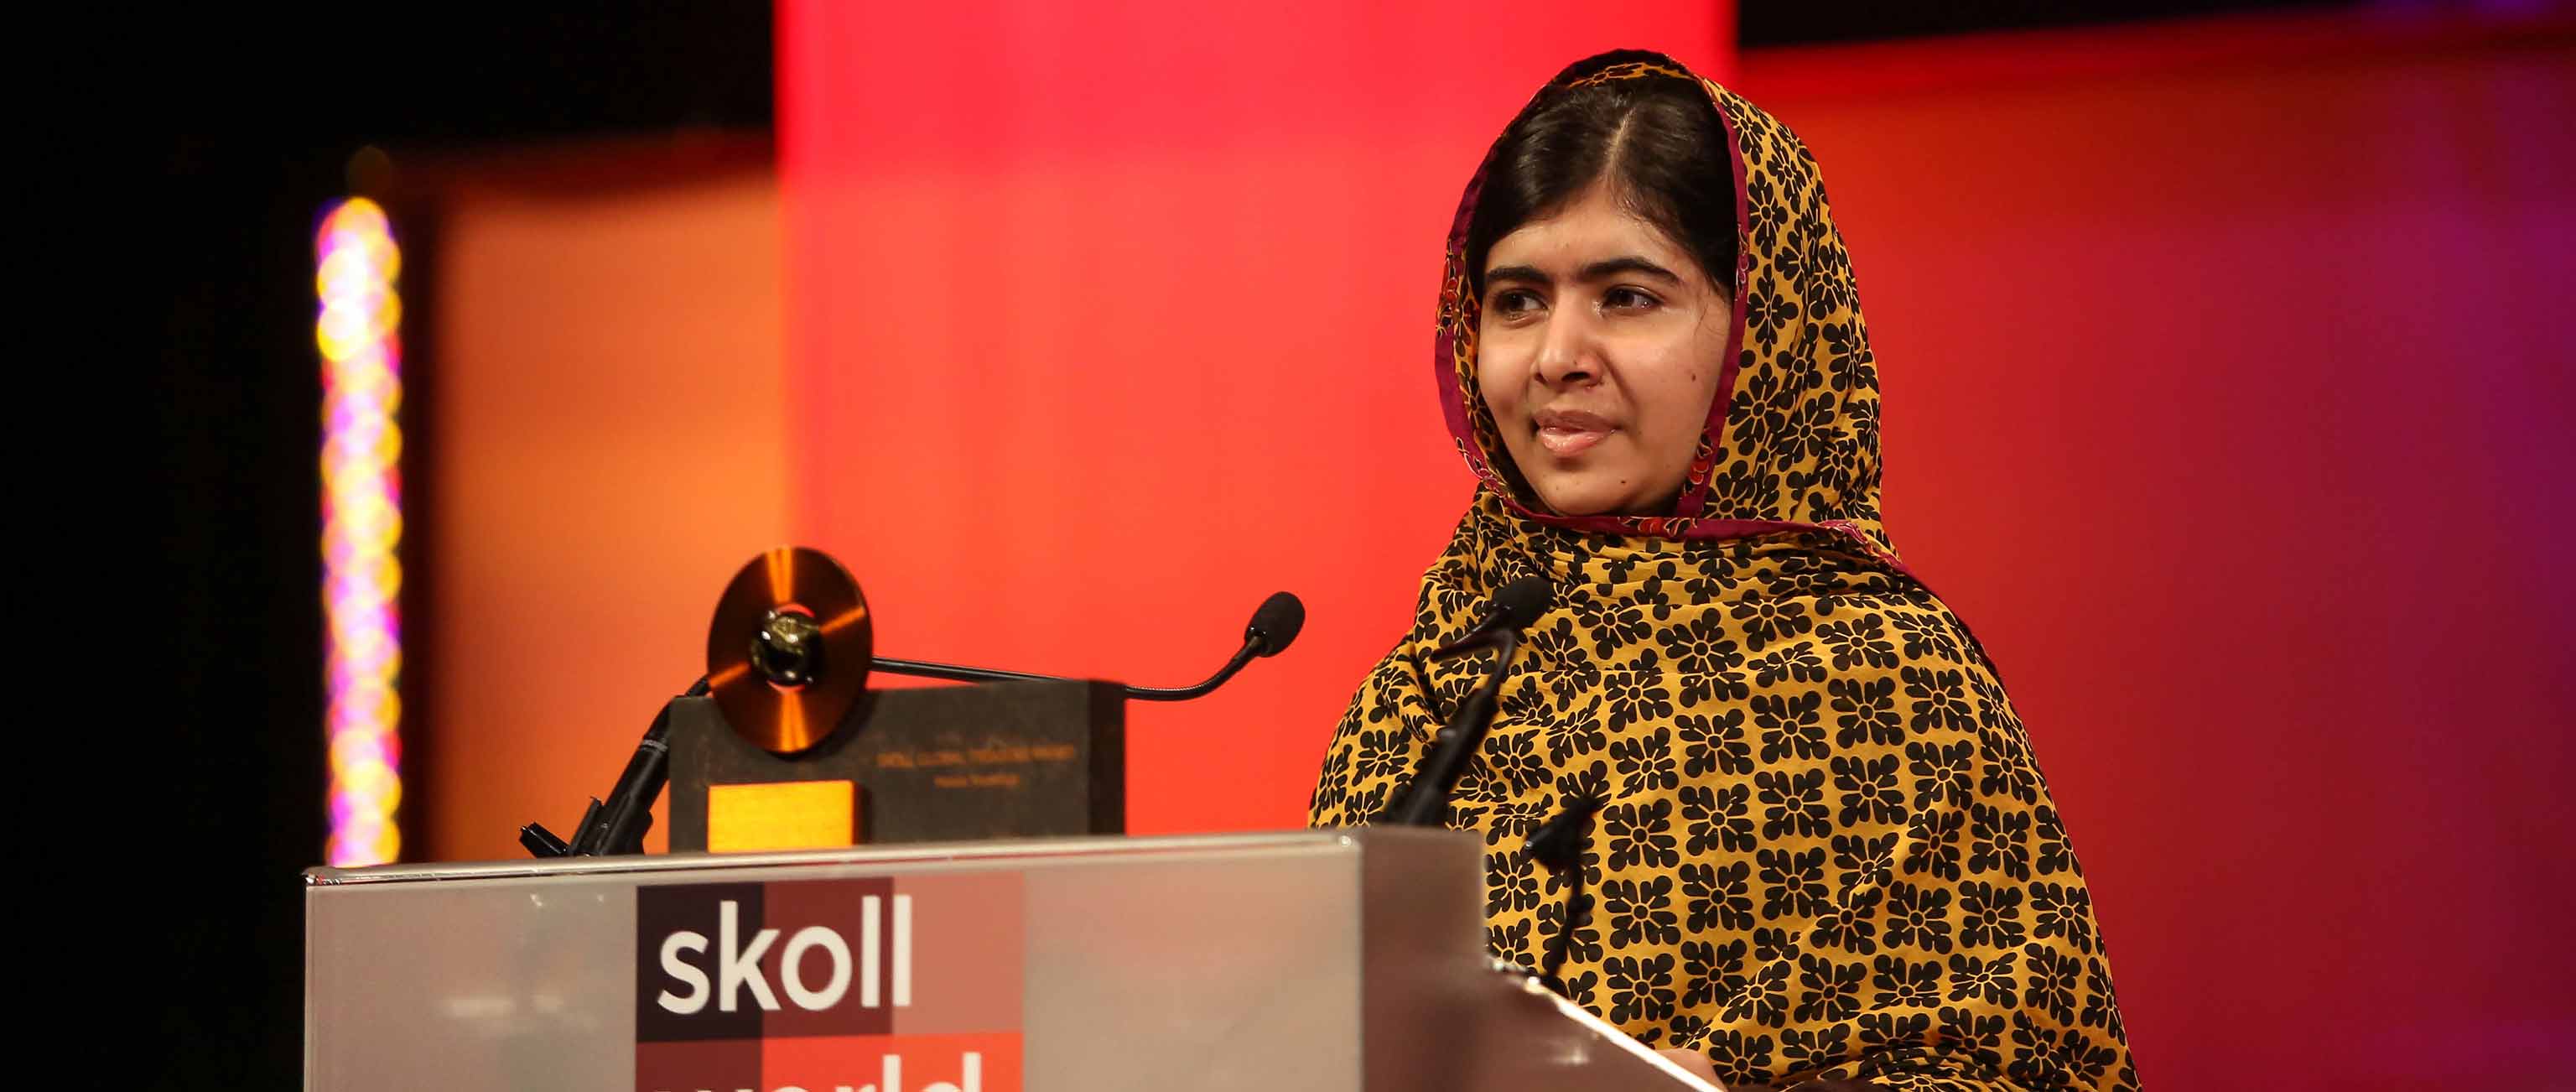 Malala Yousafzai: “Education Is Mightier than Guns”